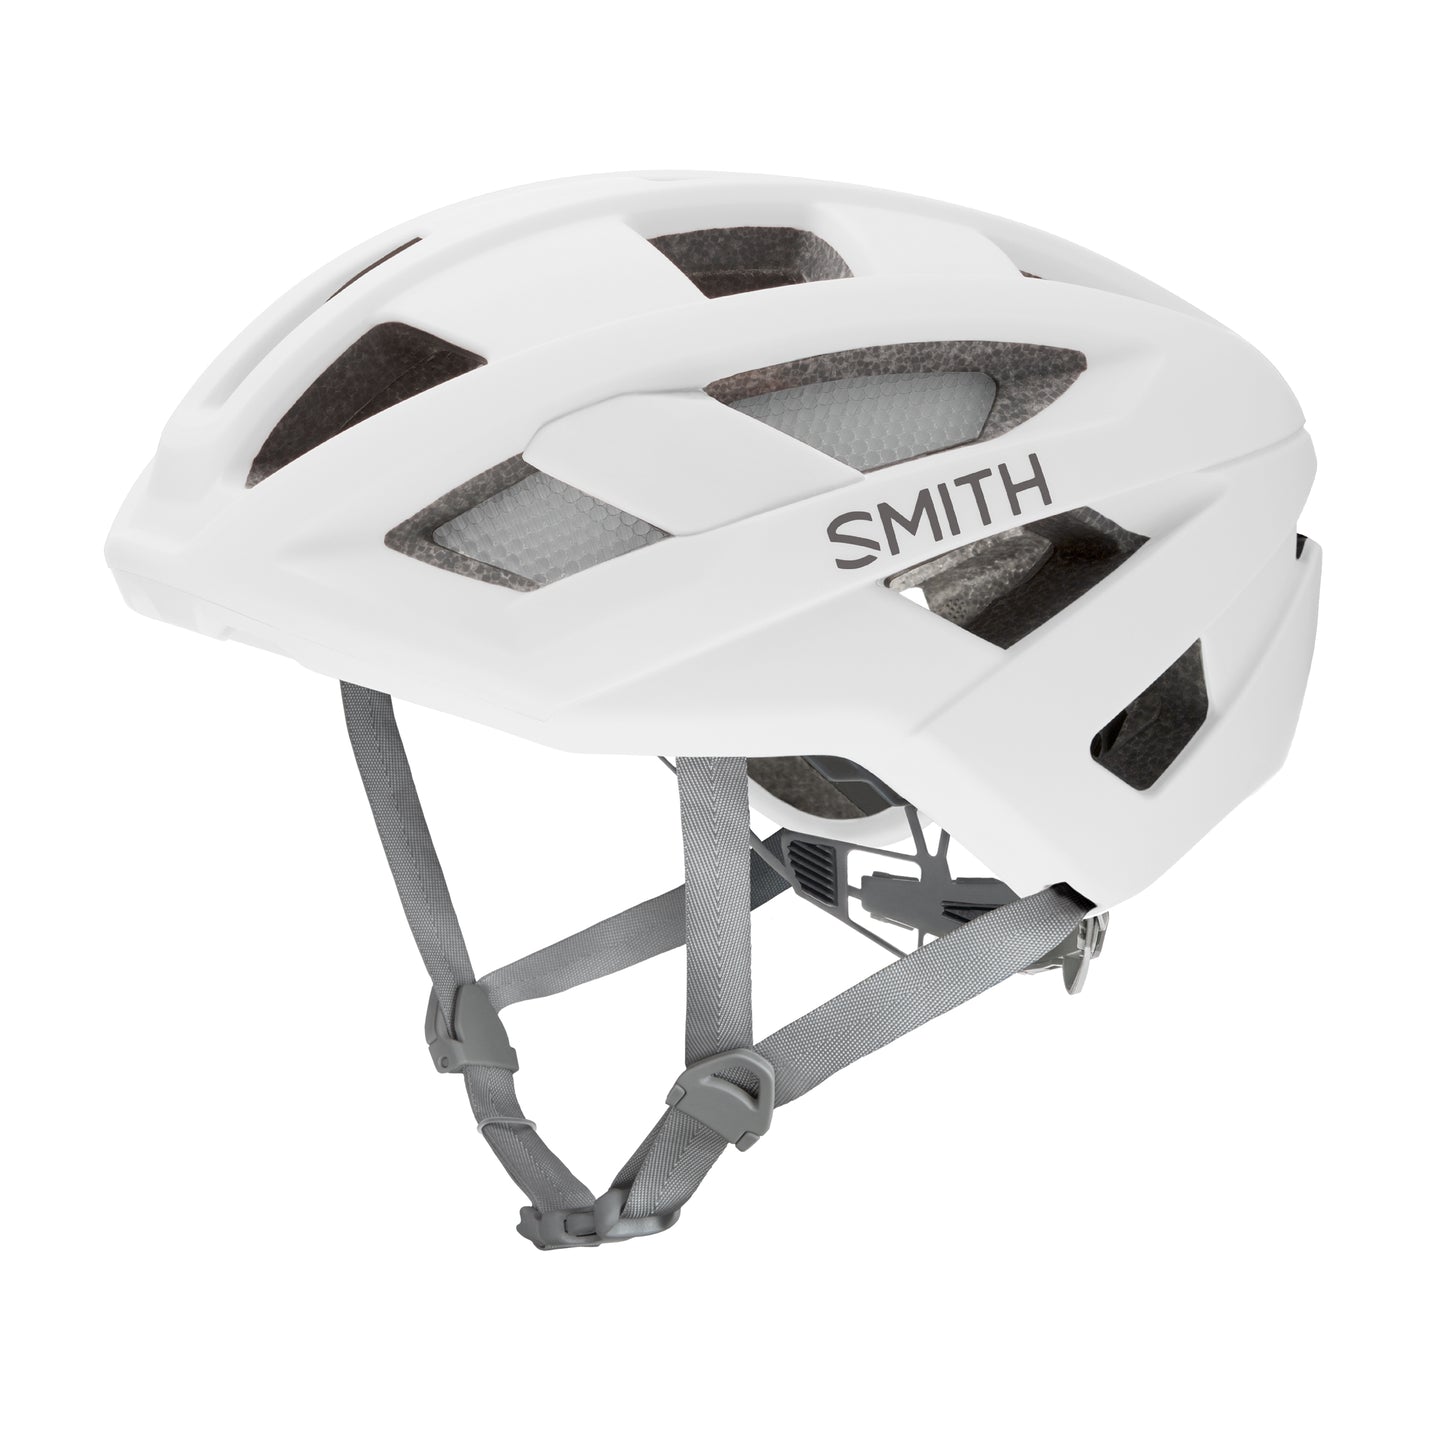 The Smith Route Road Bike Helmet